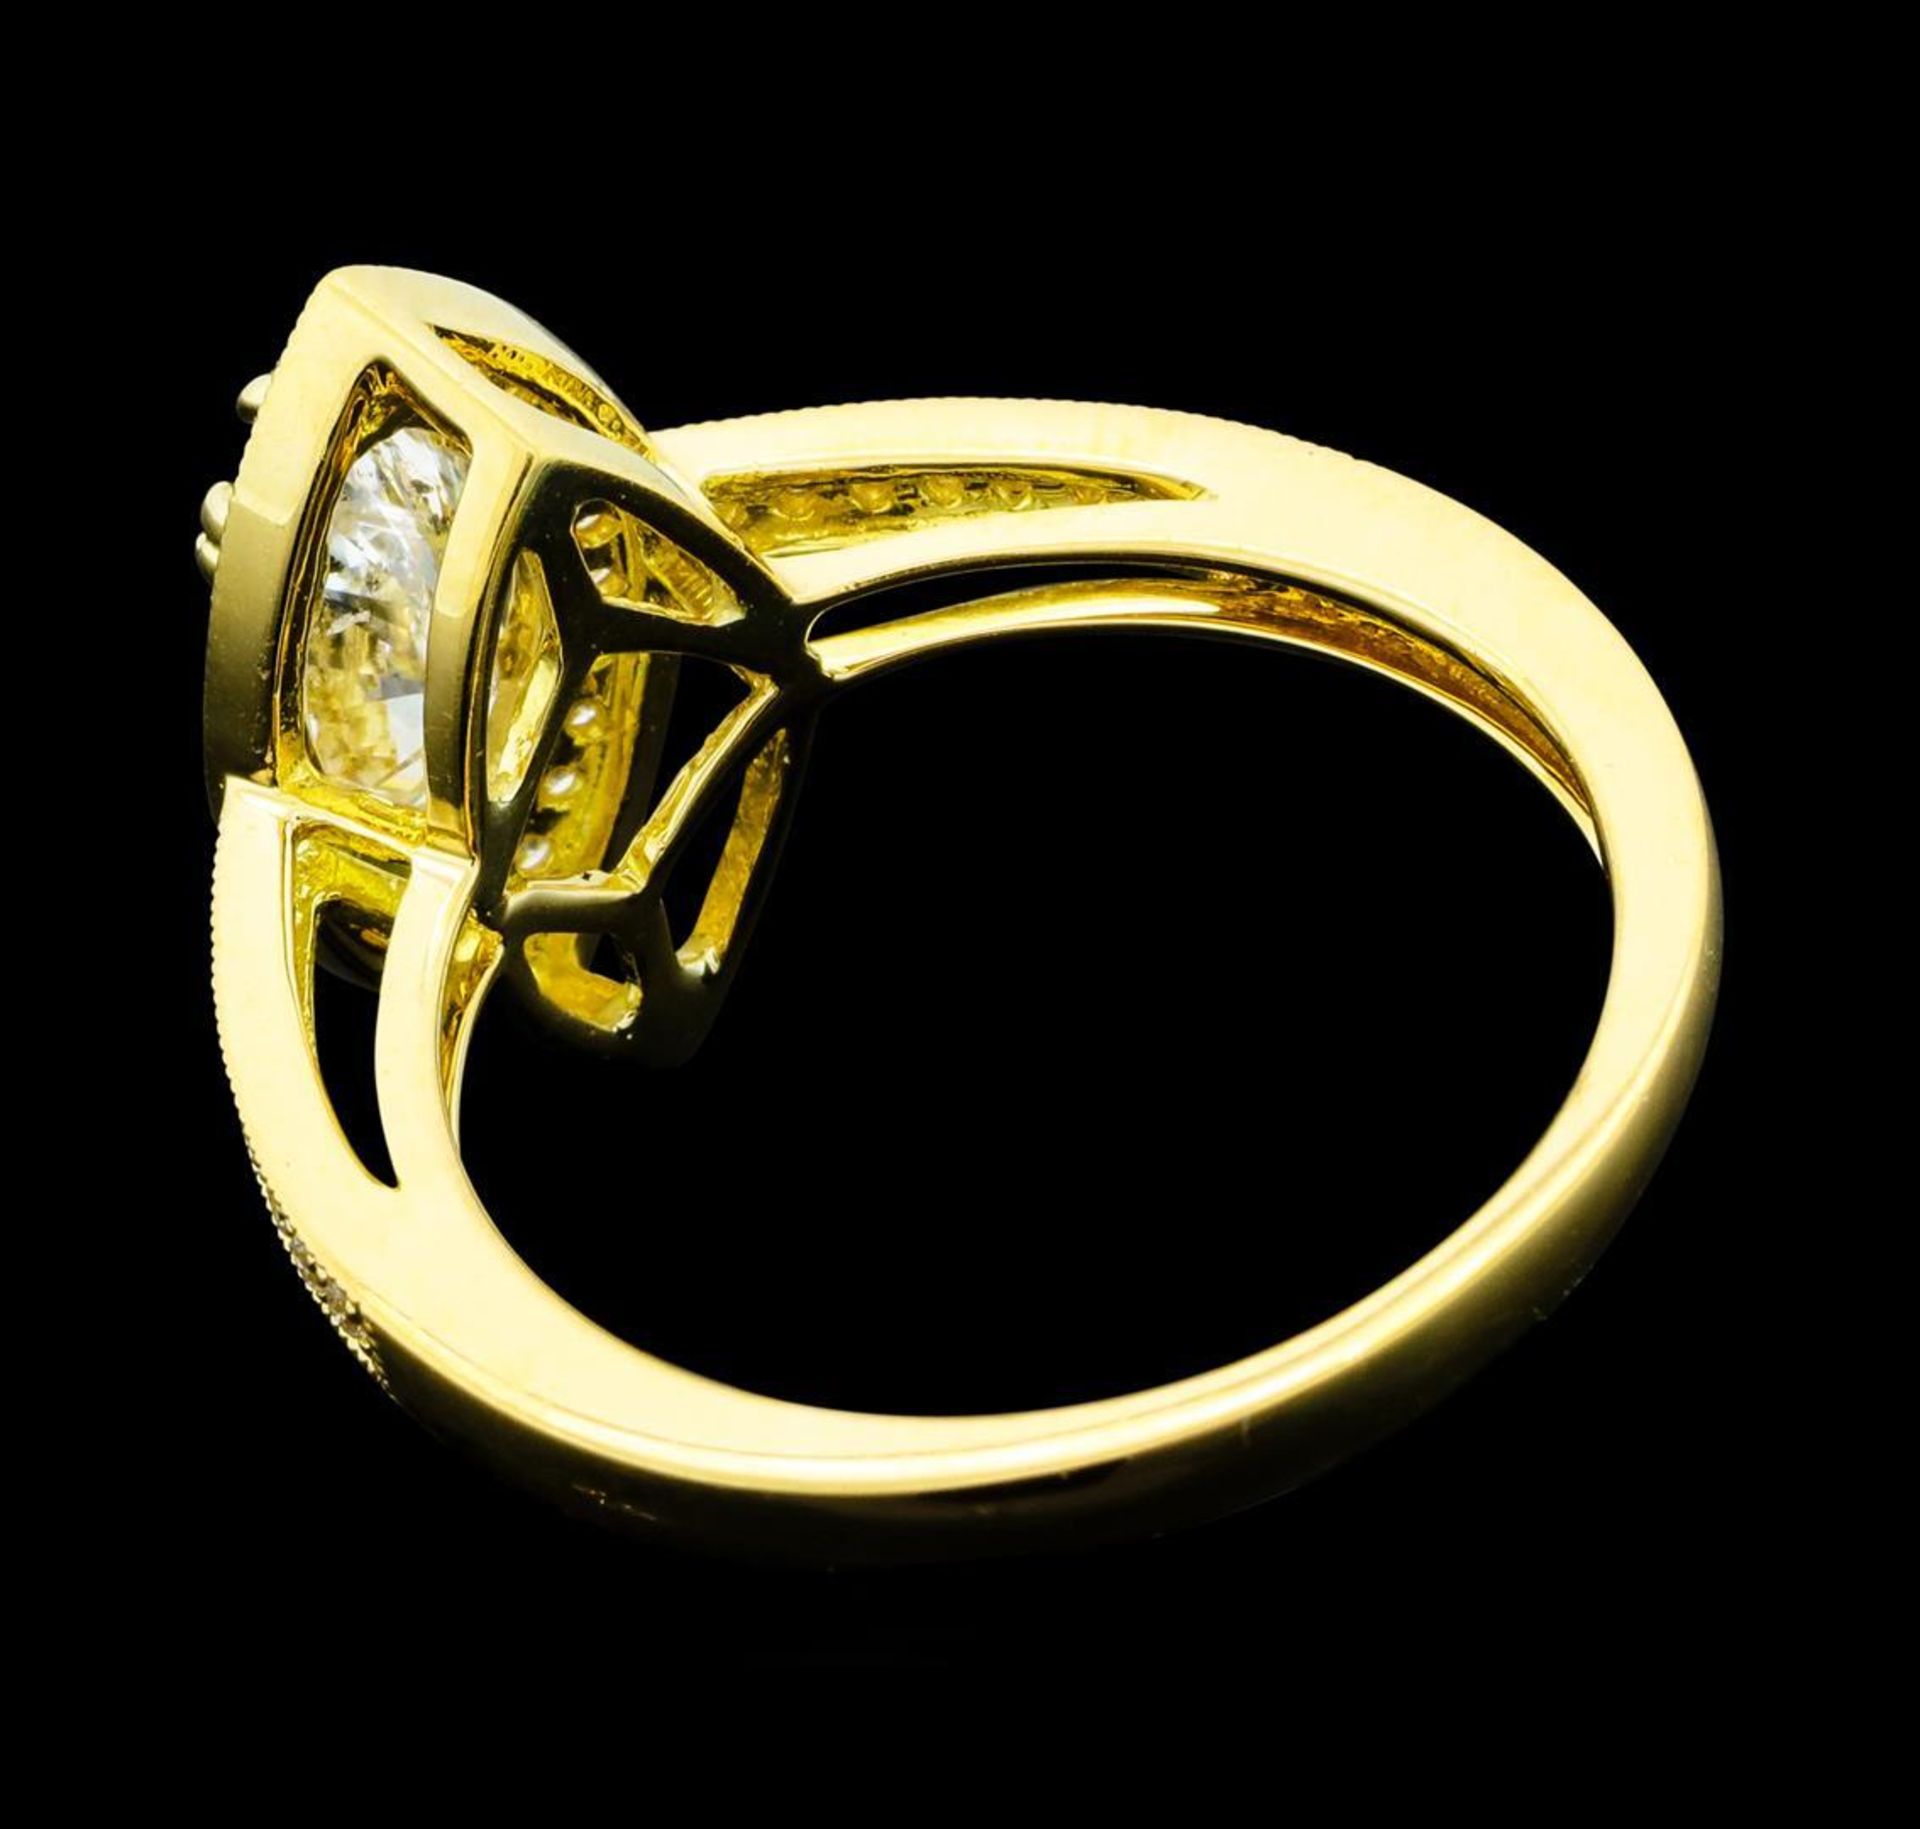 1.20 ctw Diamond Ring - 18KT Yellow Gold - Image 3 of 5